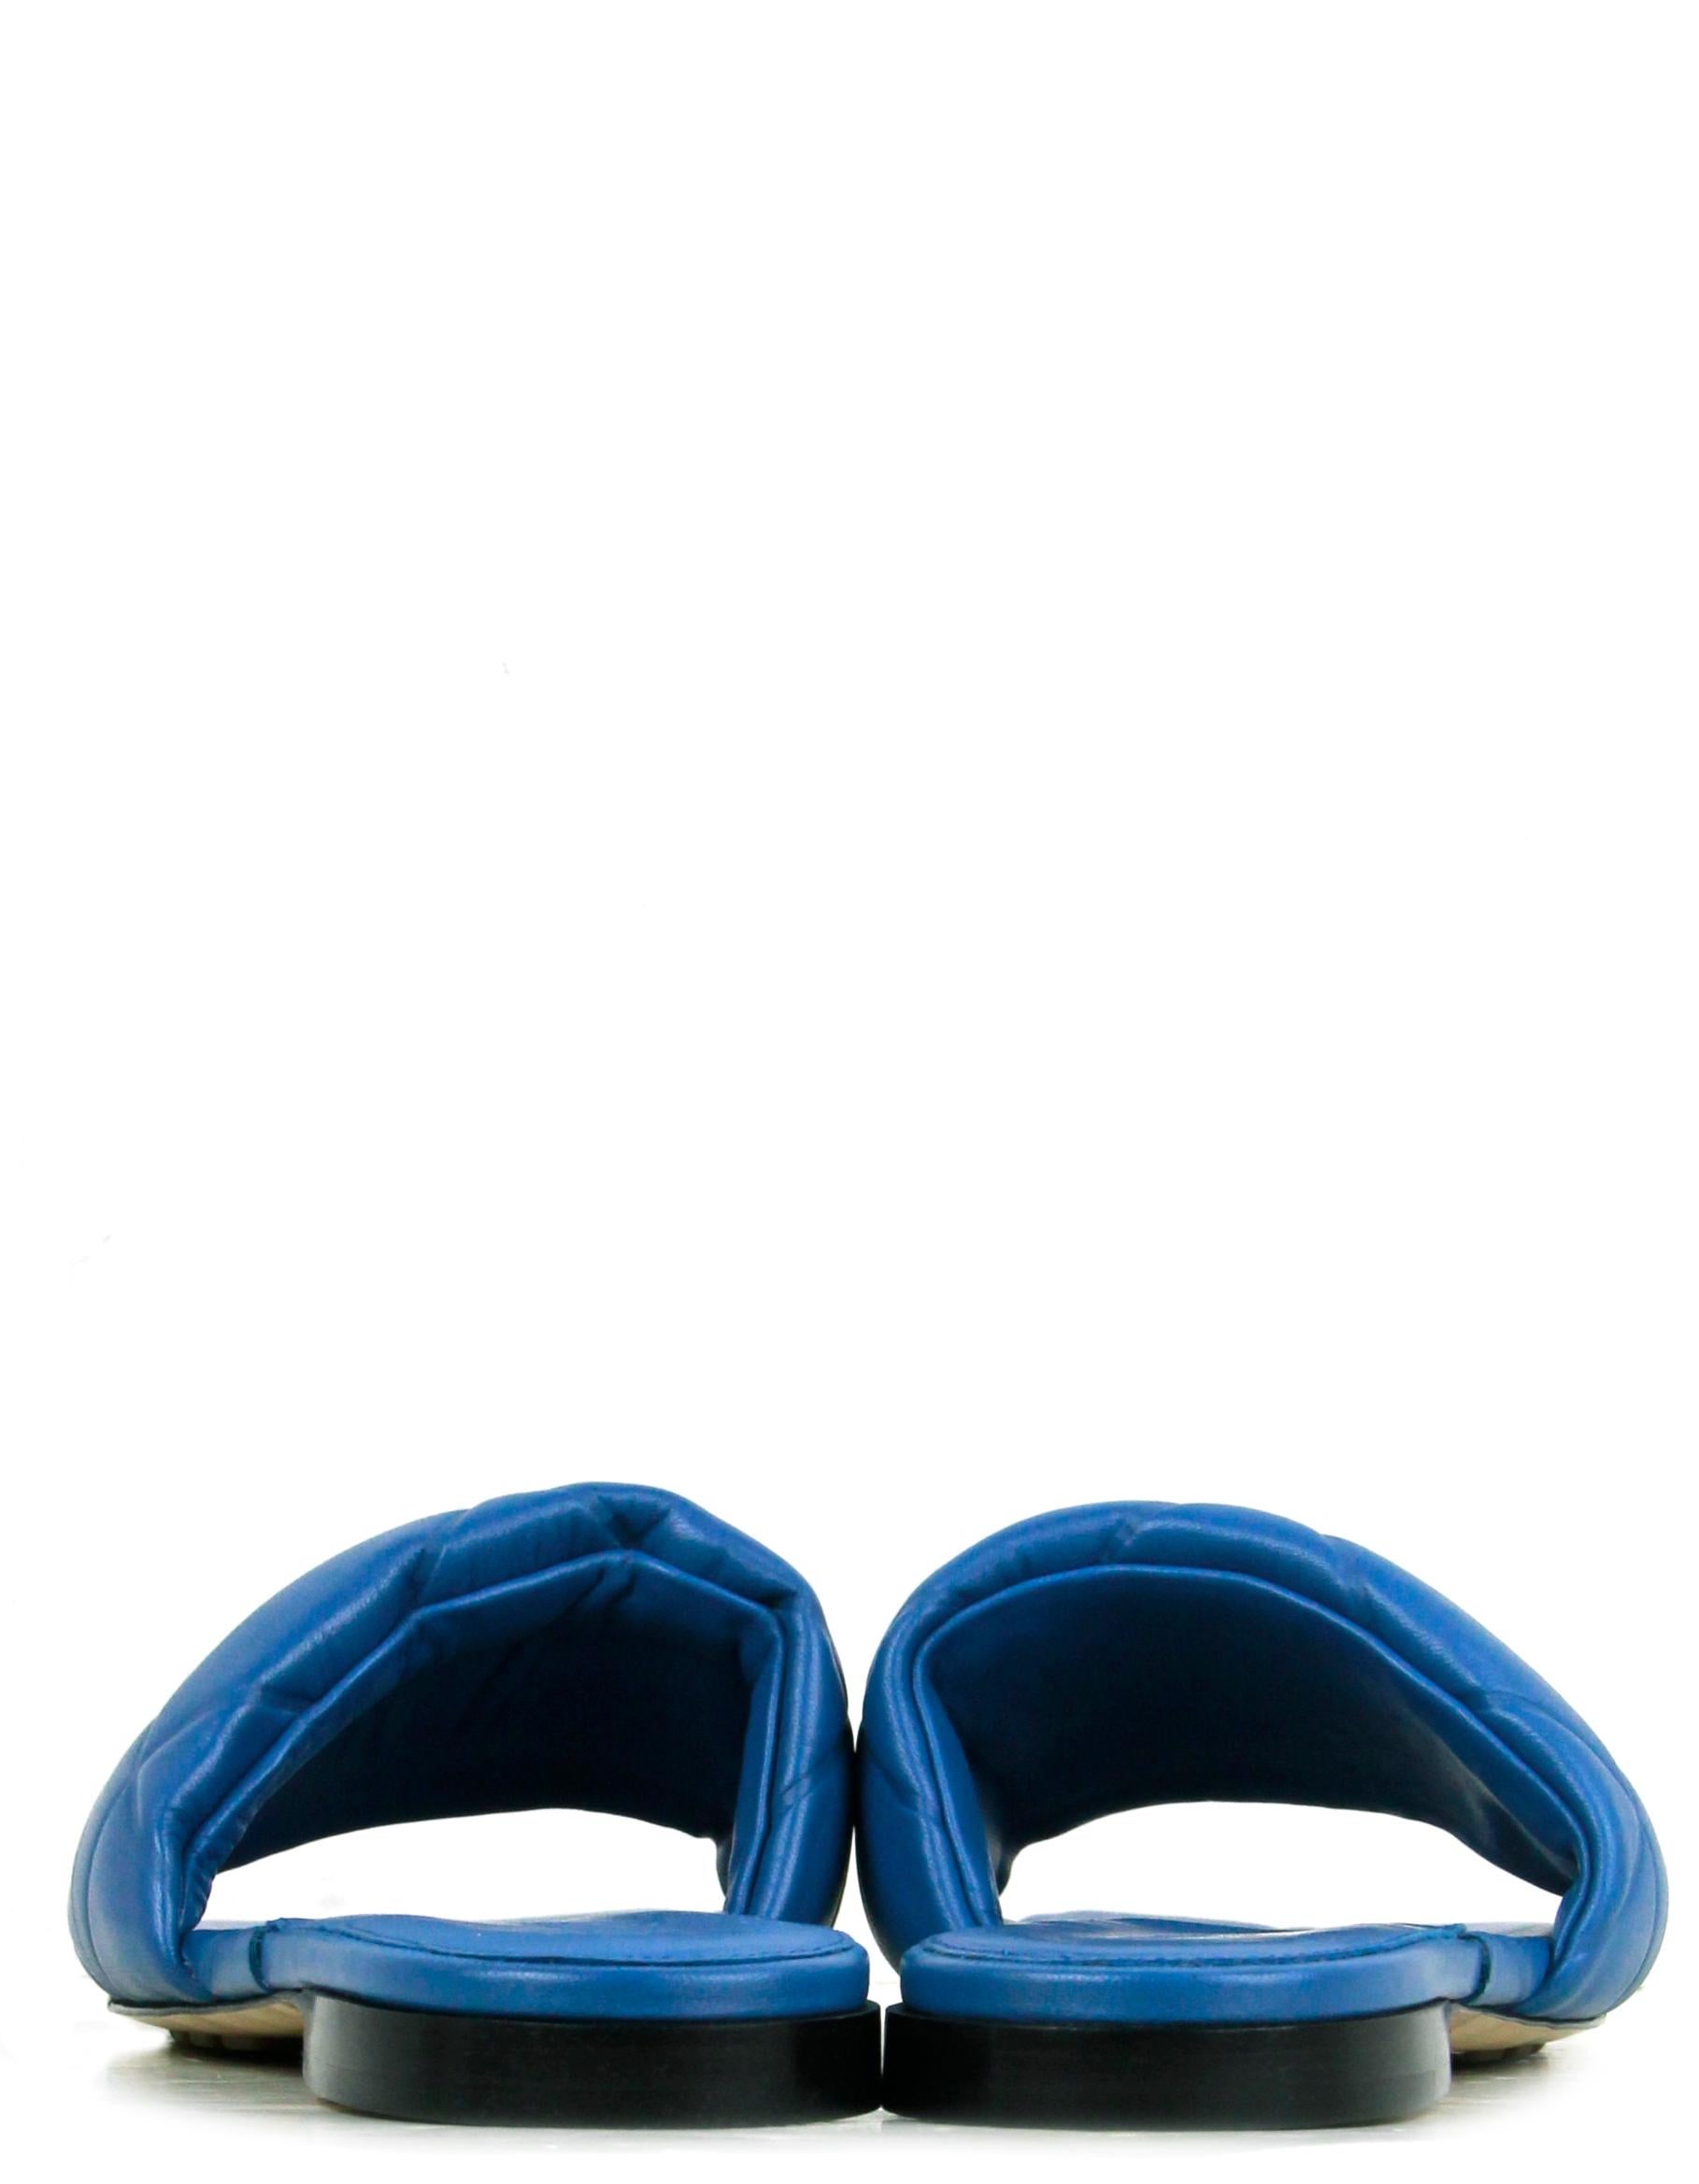 Bottega Veneta NEW Pacific Blue Leather Quilted Flat Sandals sz 39 2